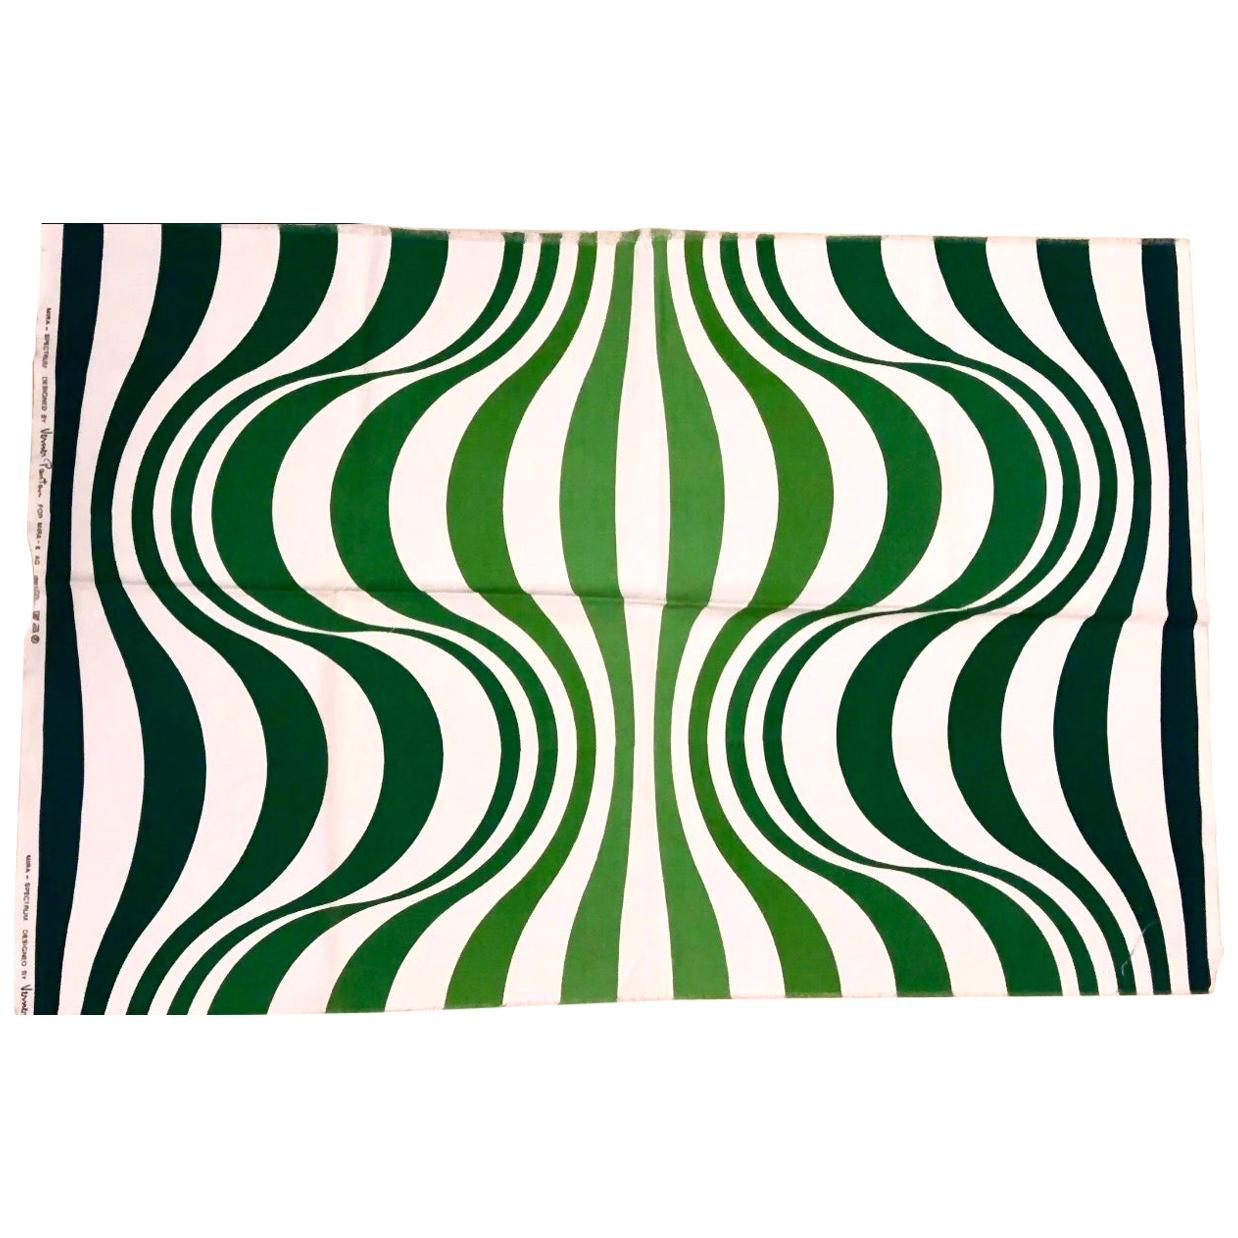 Verner Panton Green Spectrum for Mira X Handprinted Textile Panel, Rare, 1960s